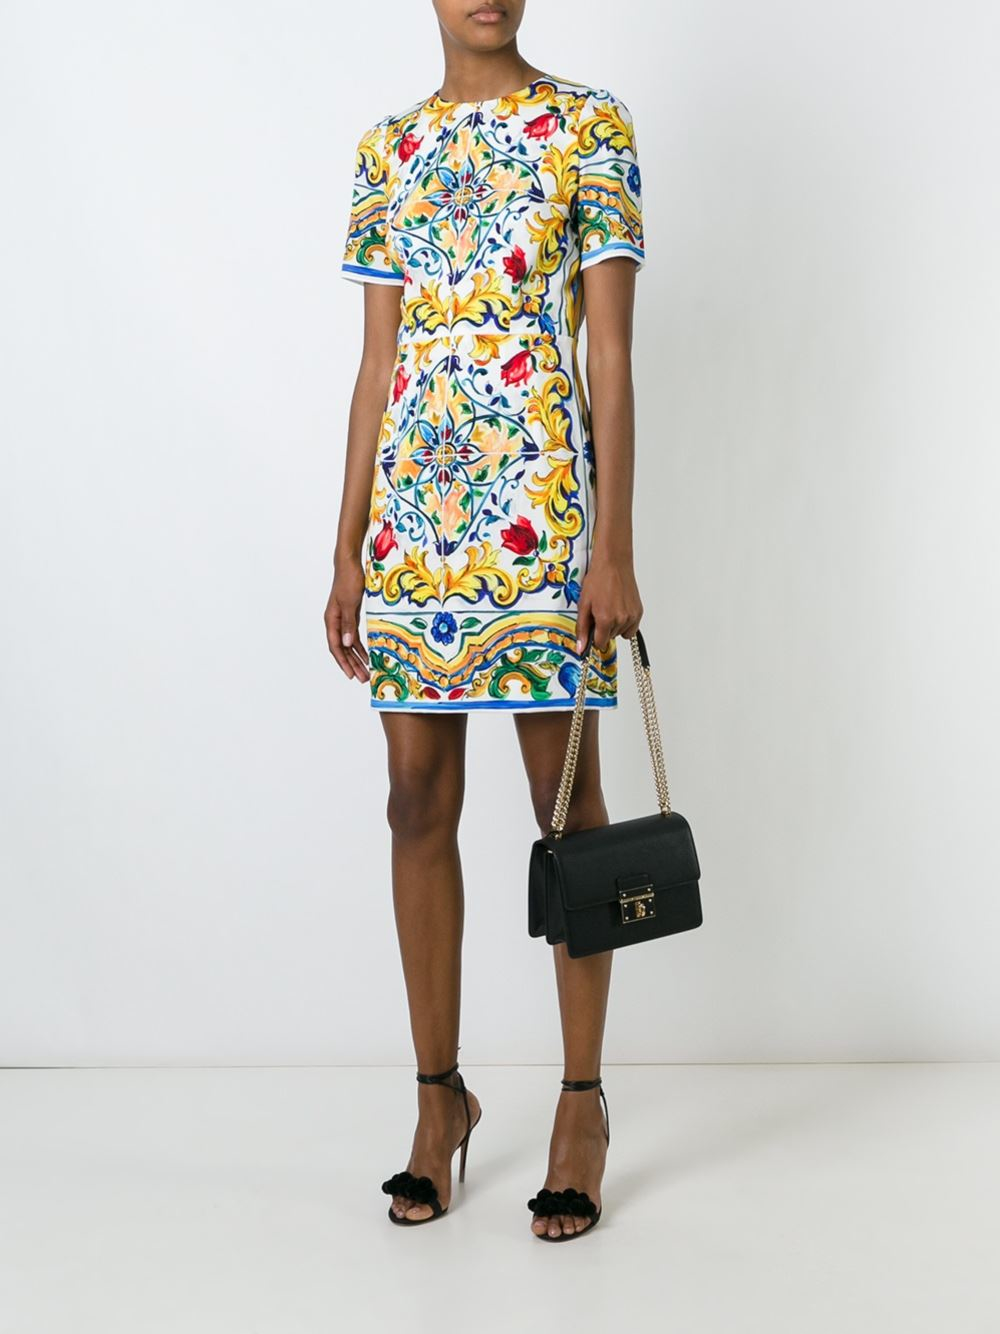 Lyst - Dolce & Gabbana Majolica Print Dress